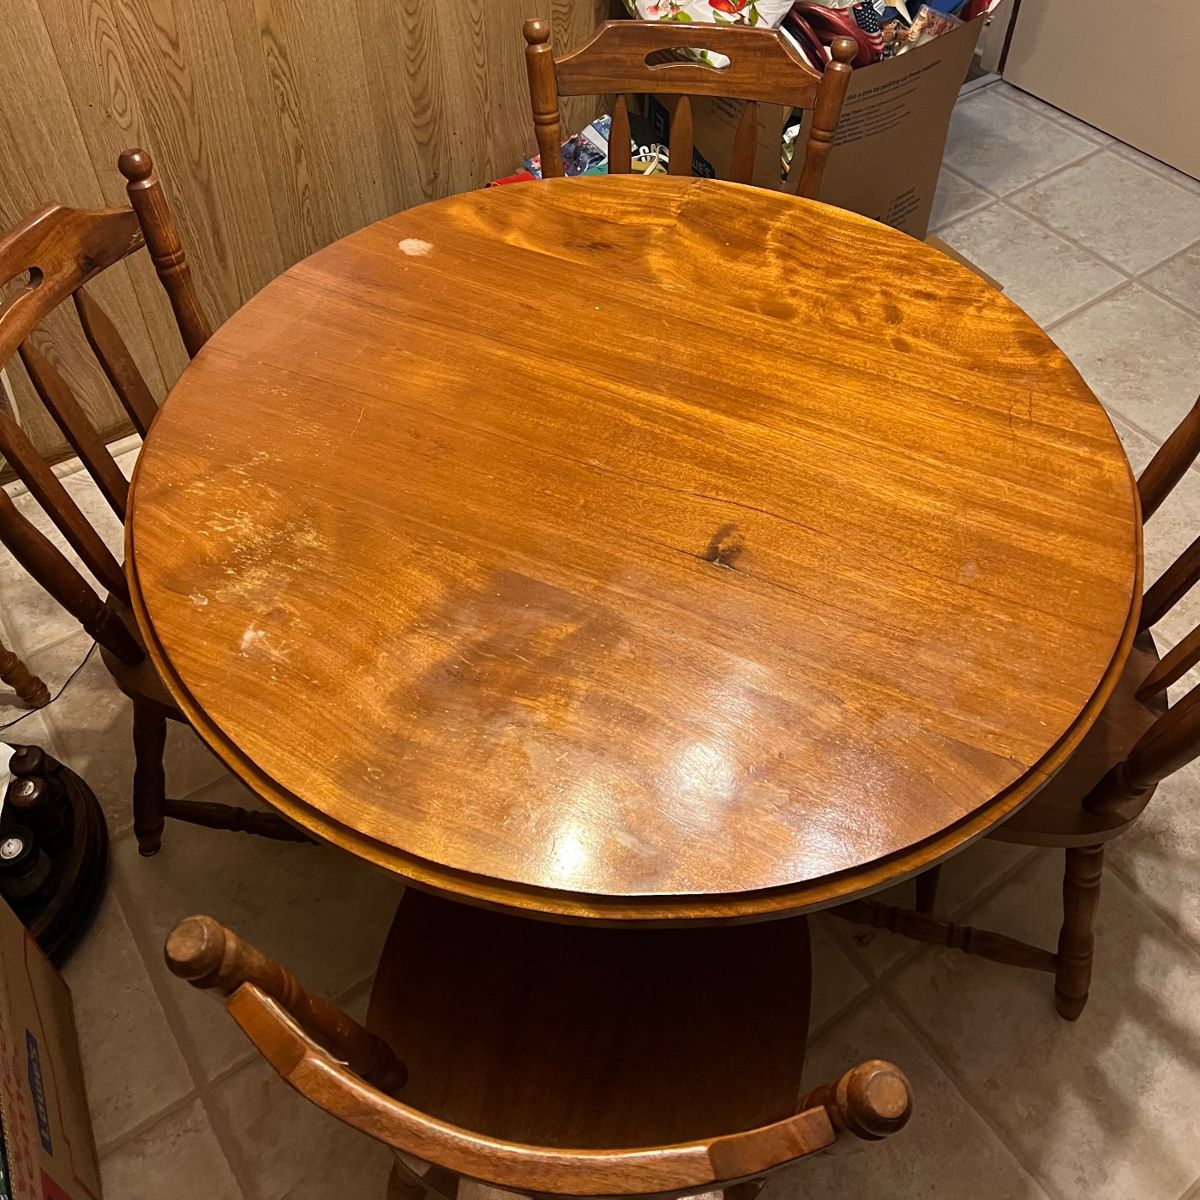 Mahogany table and chairs 